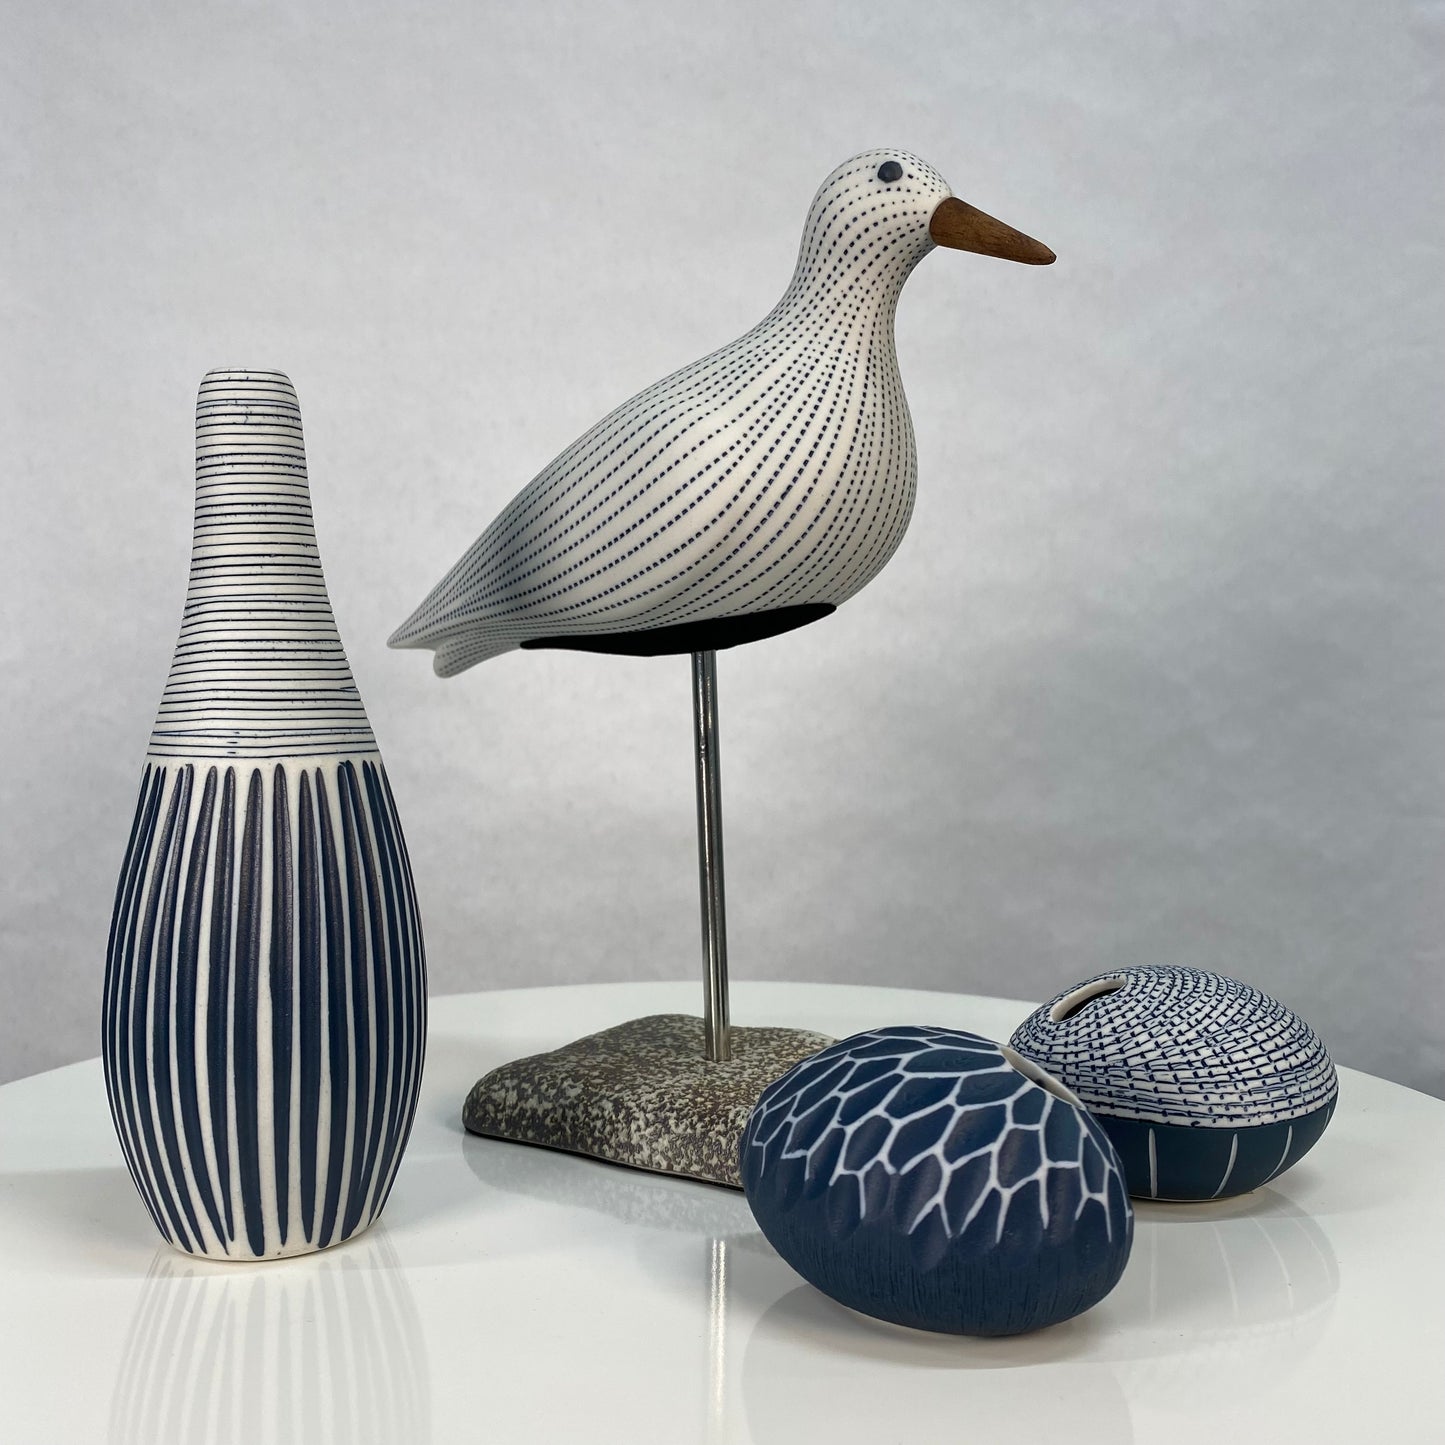 White and Blue Bird Sculpture